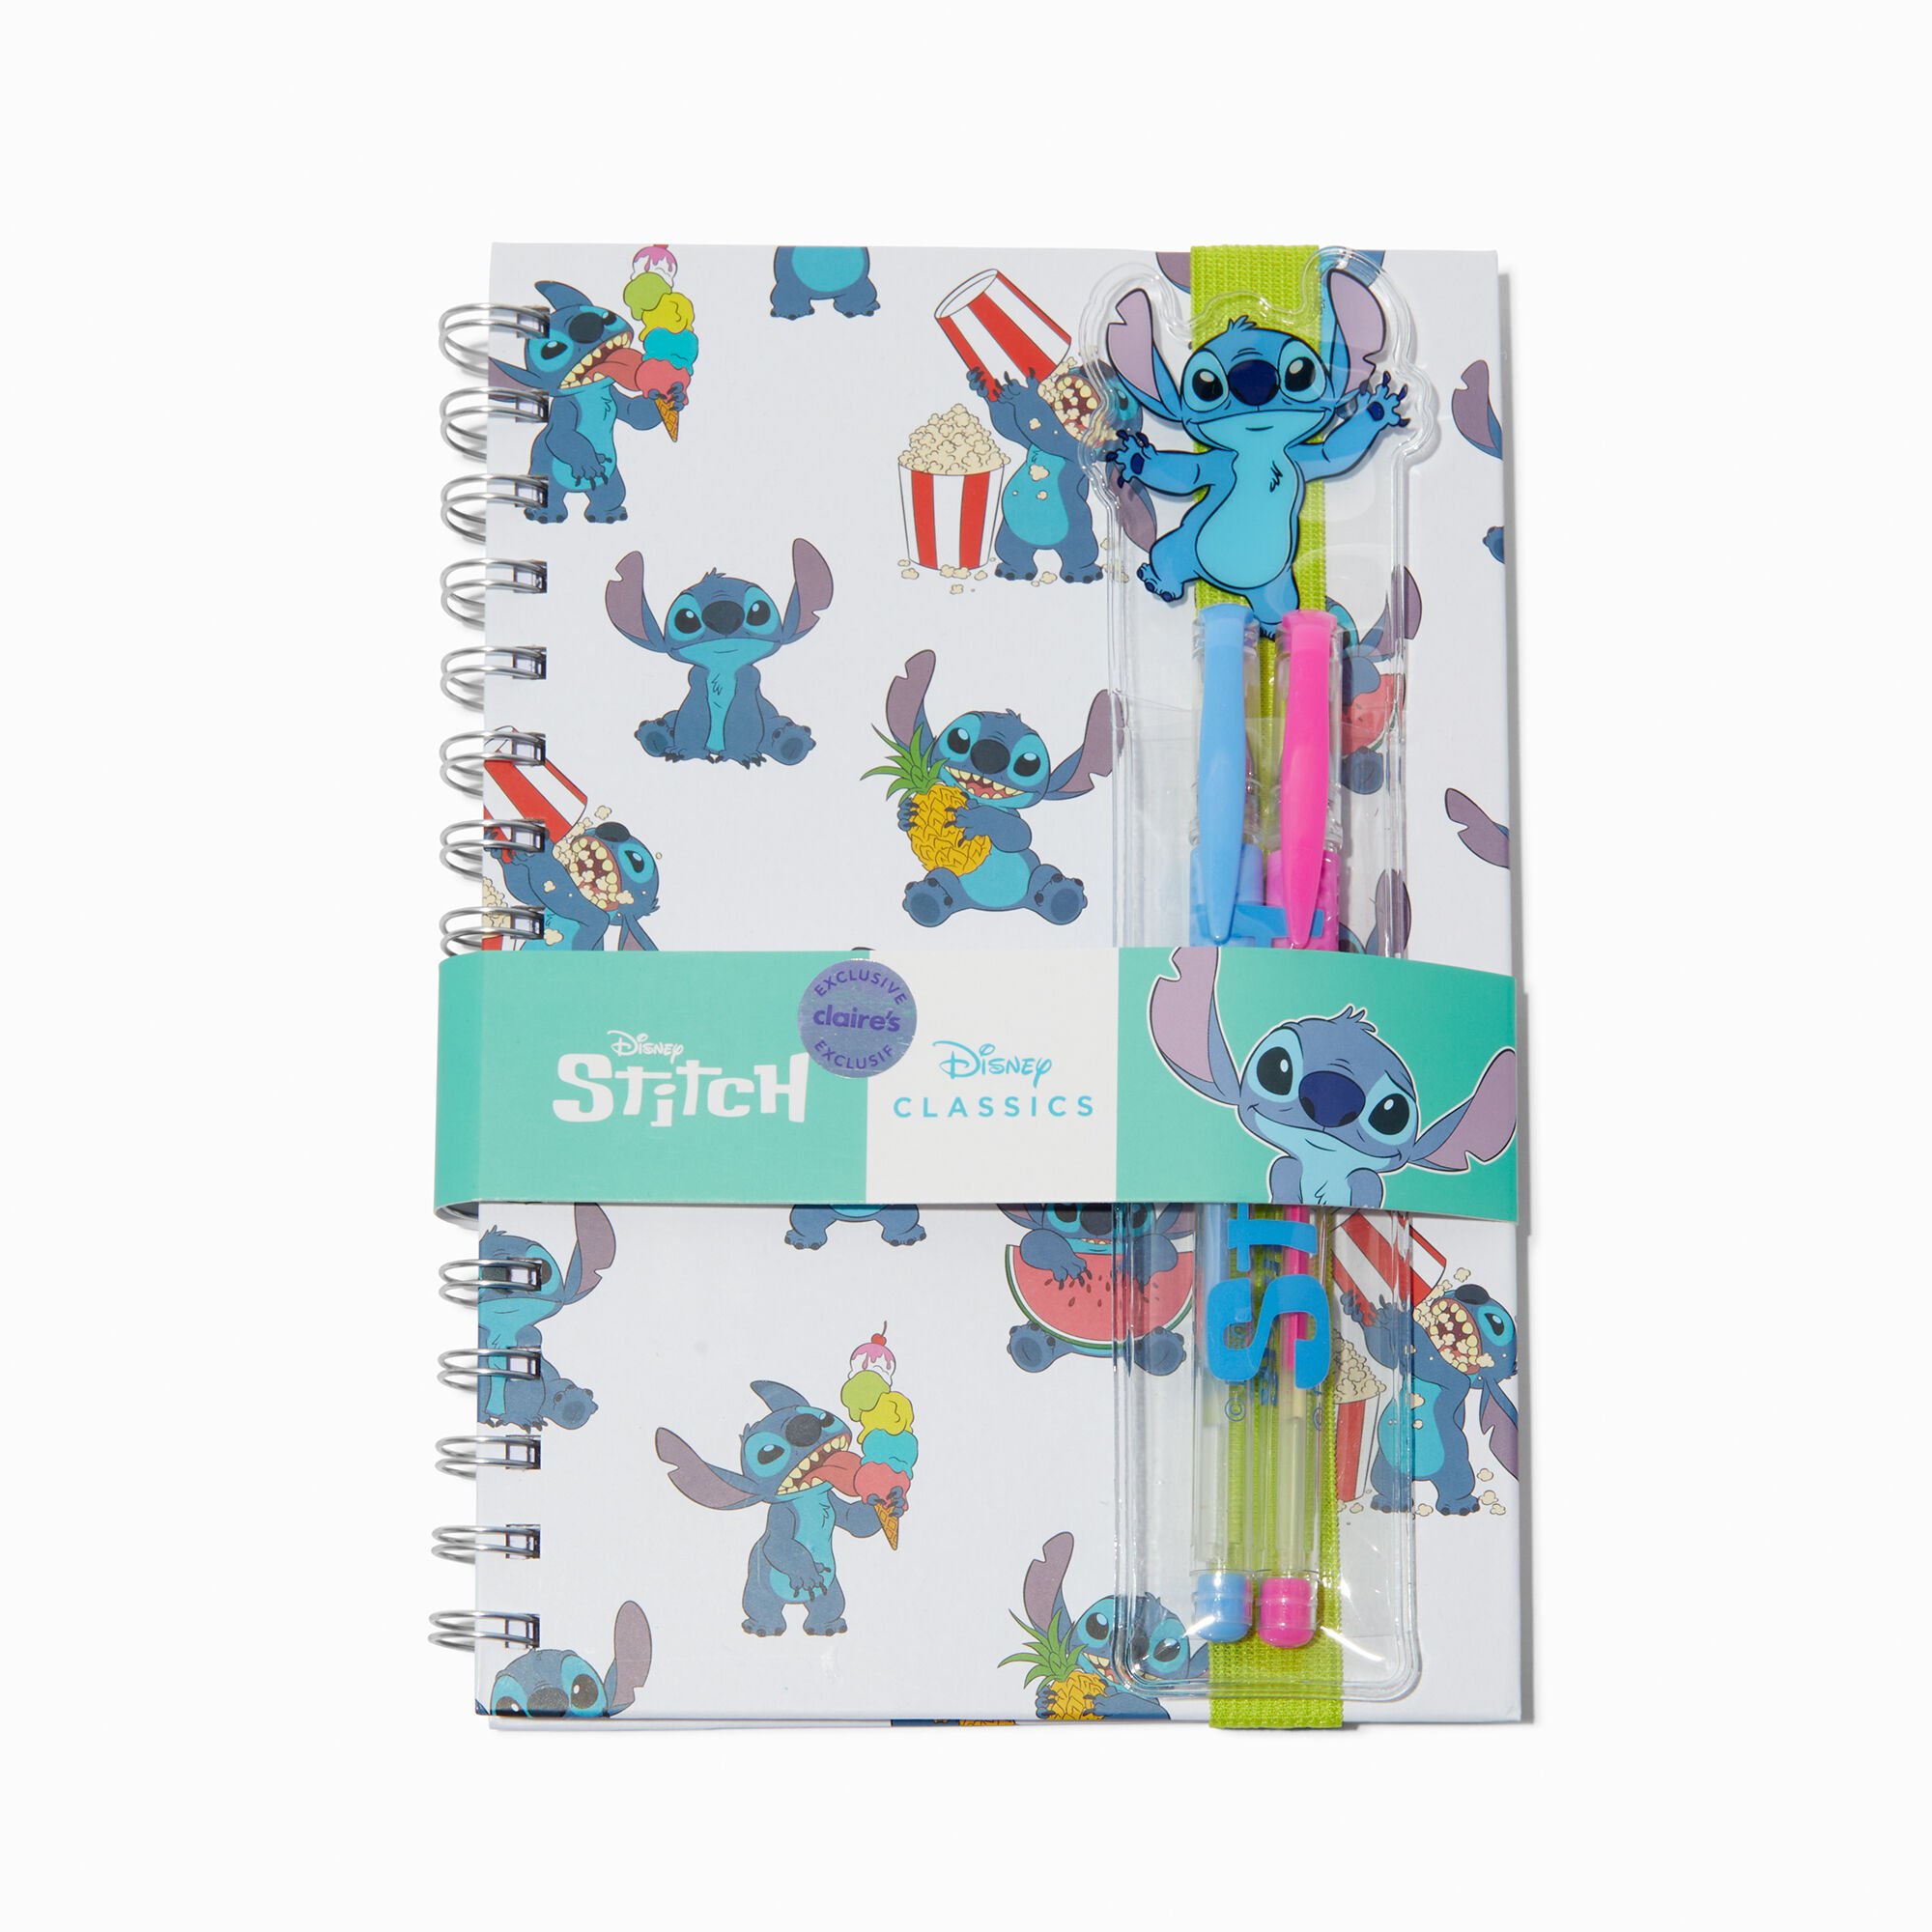 View Disney Stitch Claires Exclusive Foodie Pen Notebook Set information